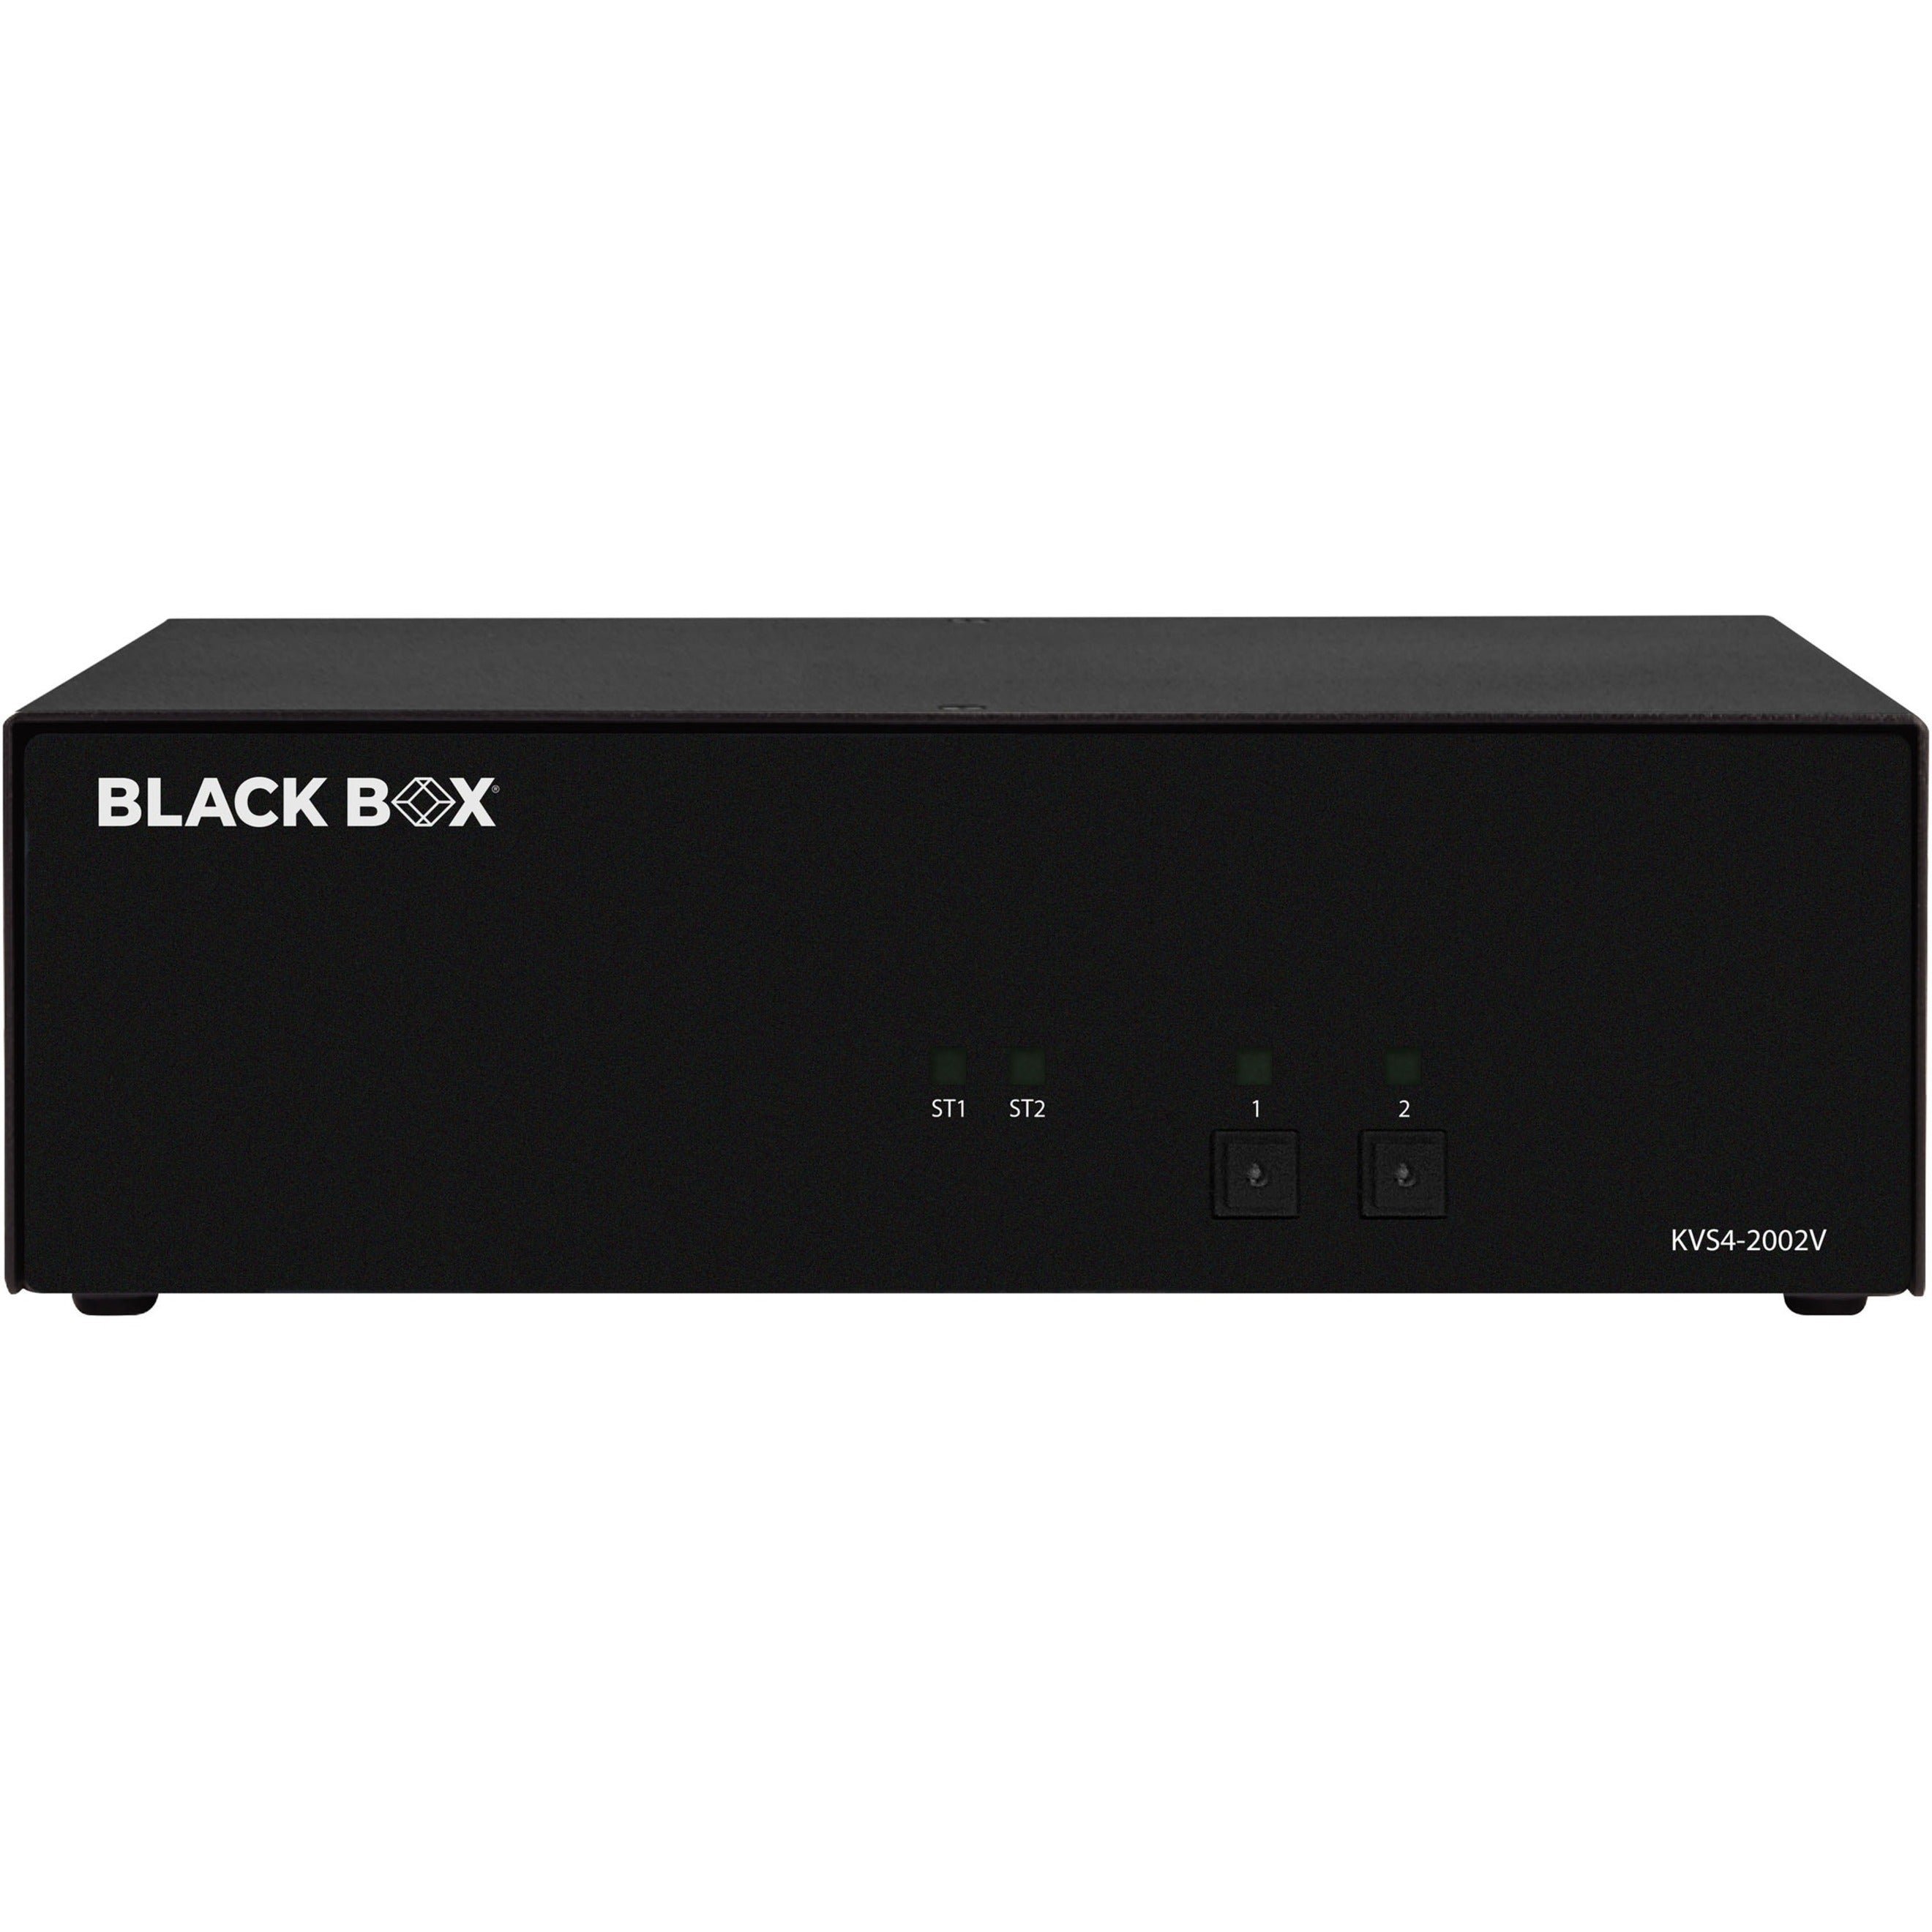 黑盒子 KVS4-2002V 安全KVM切换器 - DisplayPort，4个USB端口，6个DisplayPorts，3840 x 2160分辨率，1年保修